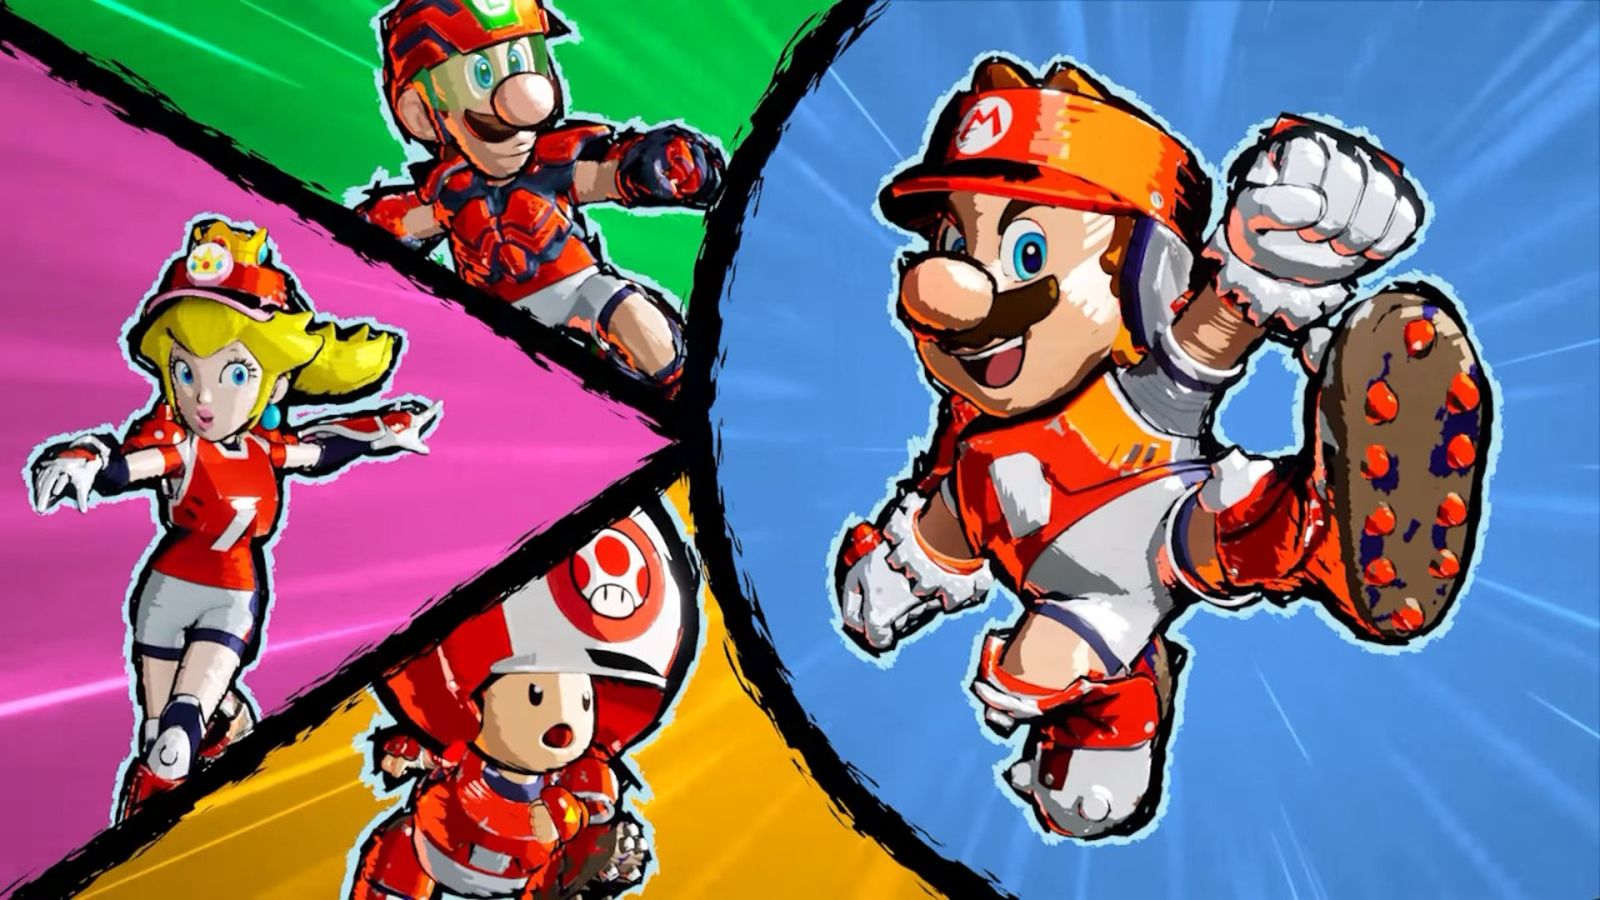 Image of Mario, Peach, Toad, and Luigi in Mario Strikers: Battle League.